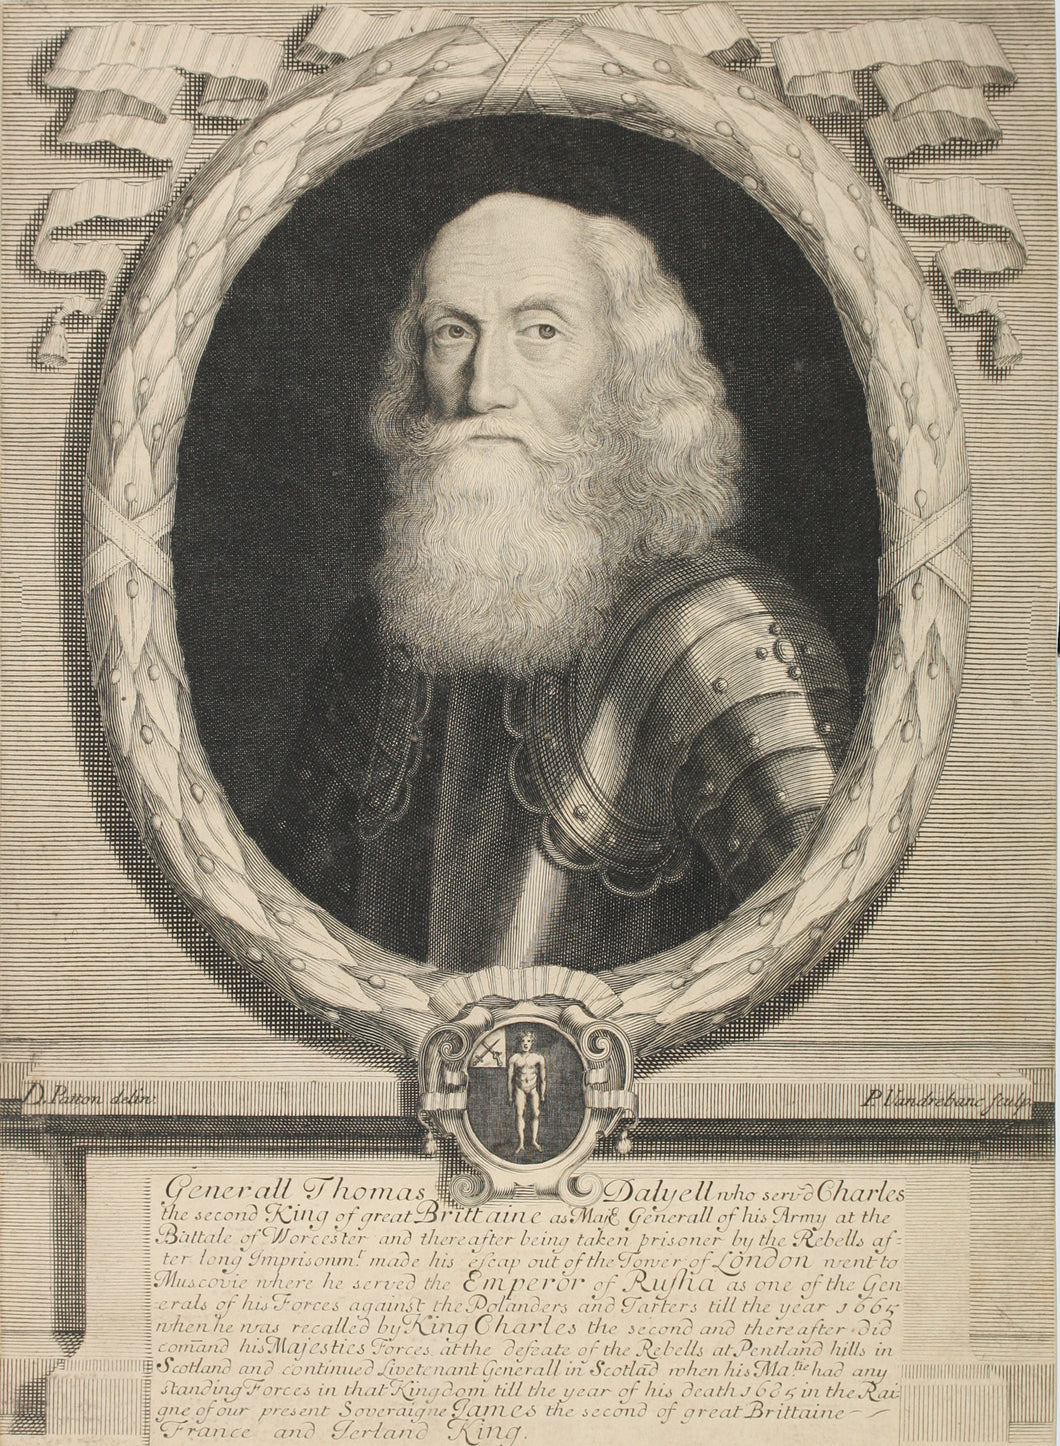 David Paton, after. Portrait of General Thomas Dalyell. Engraving by Peter Vandrebanc. 1685.